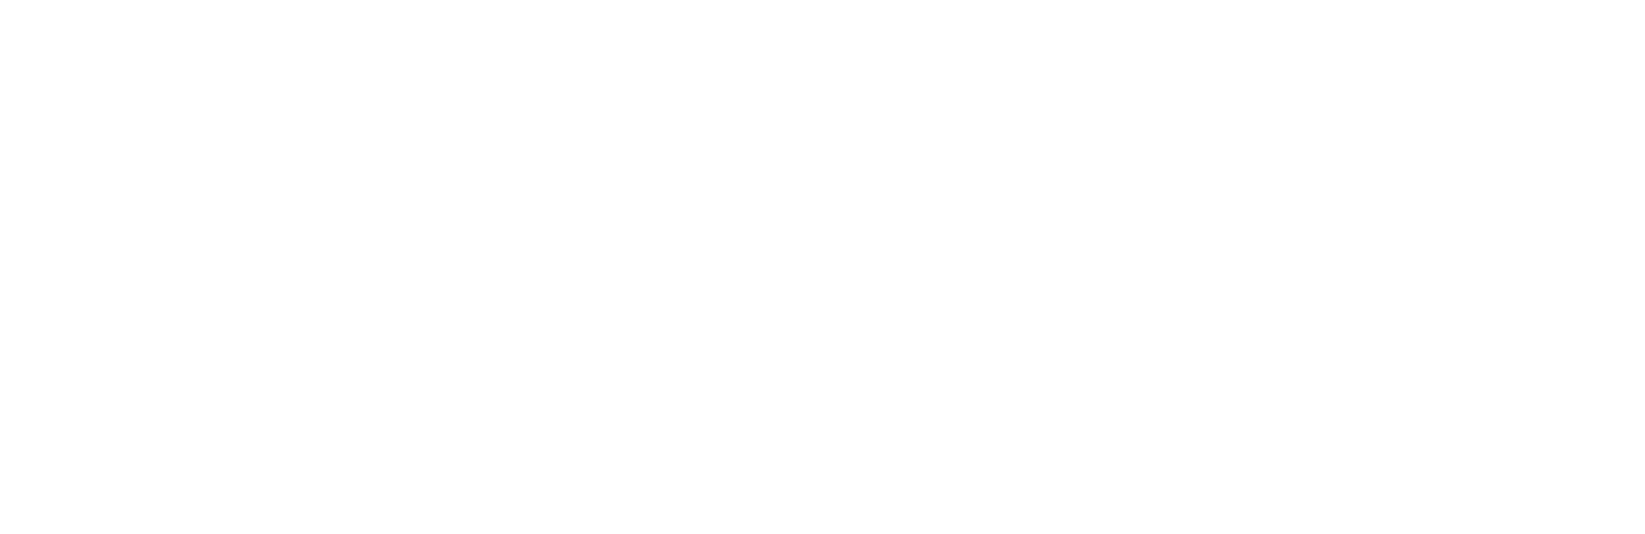 IP-EUROPE white